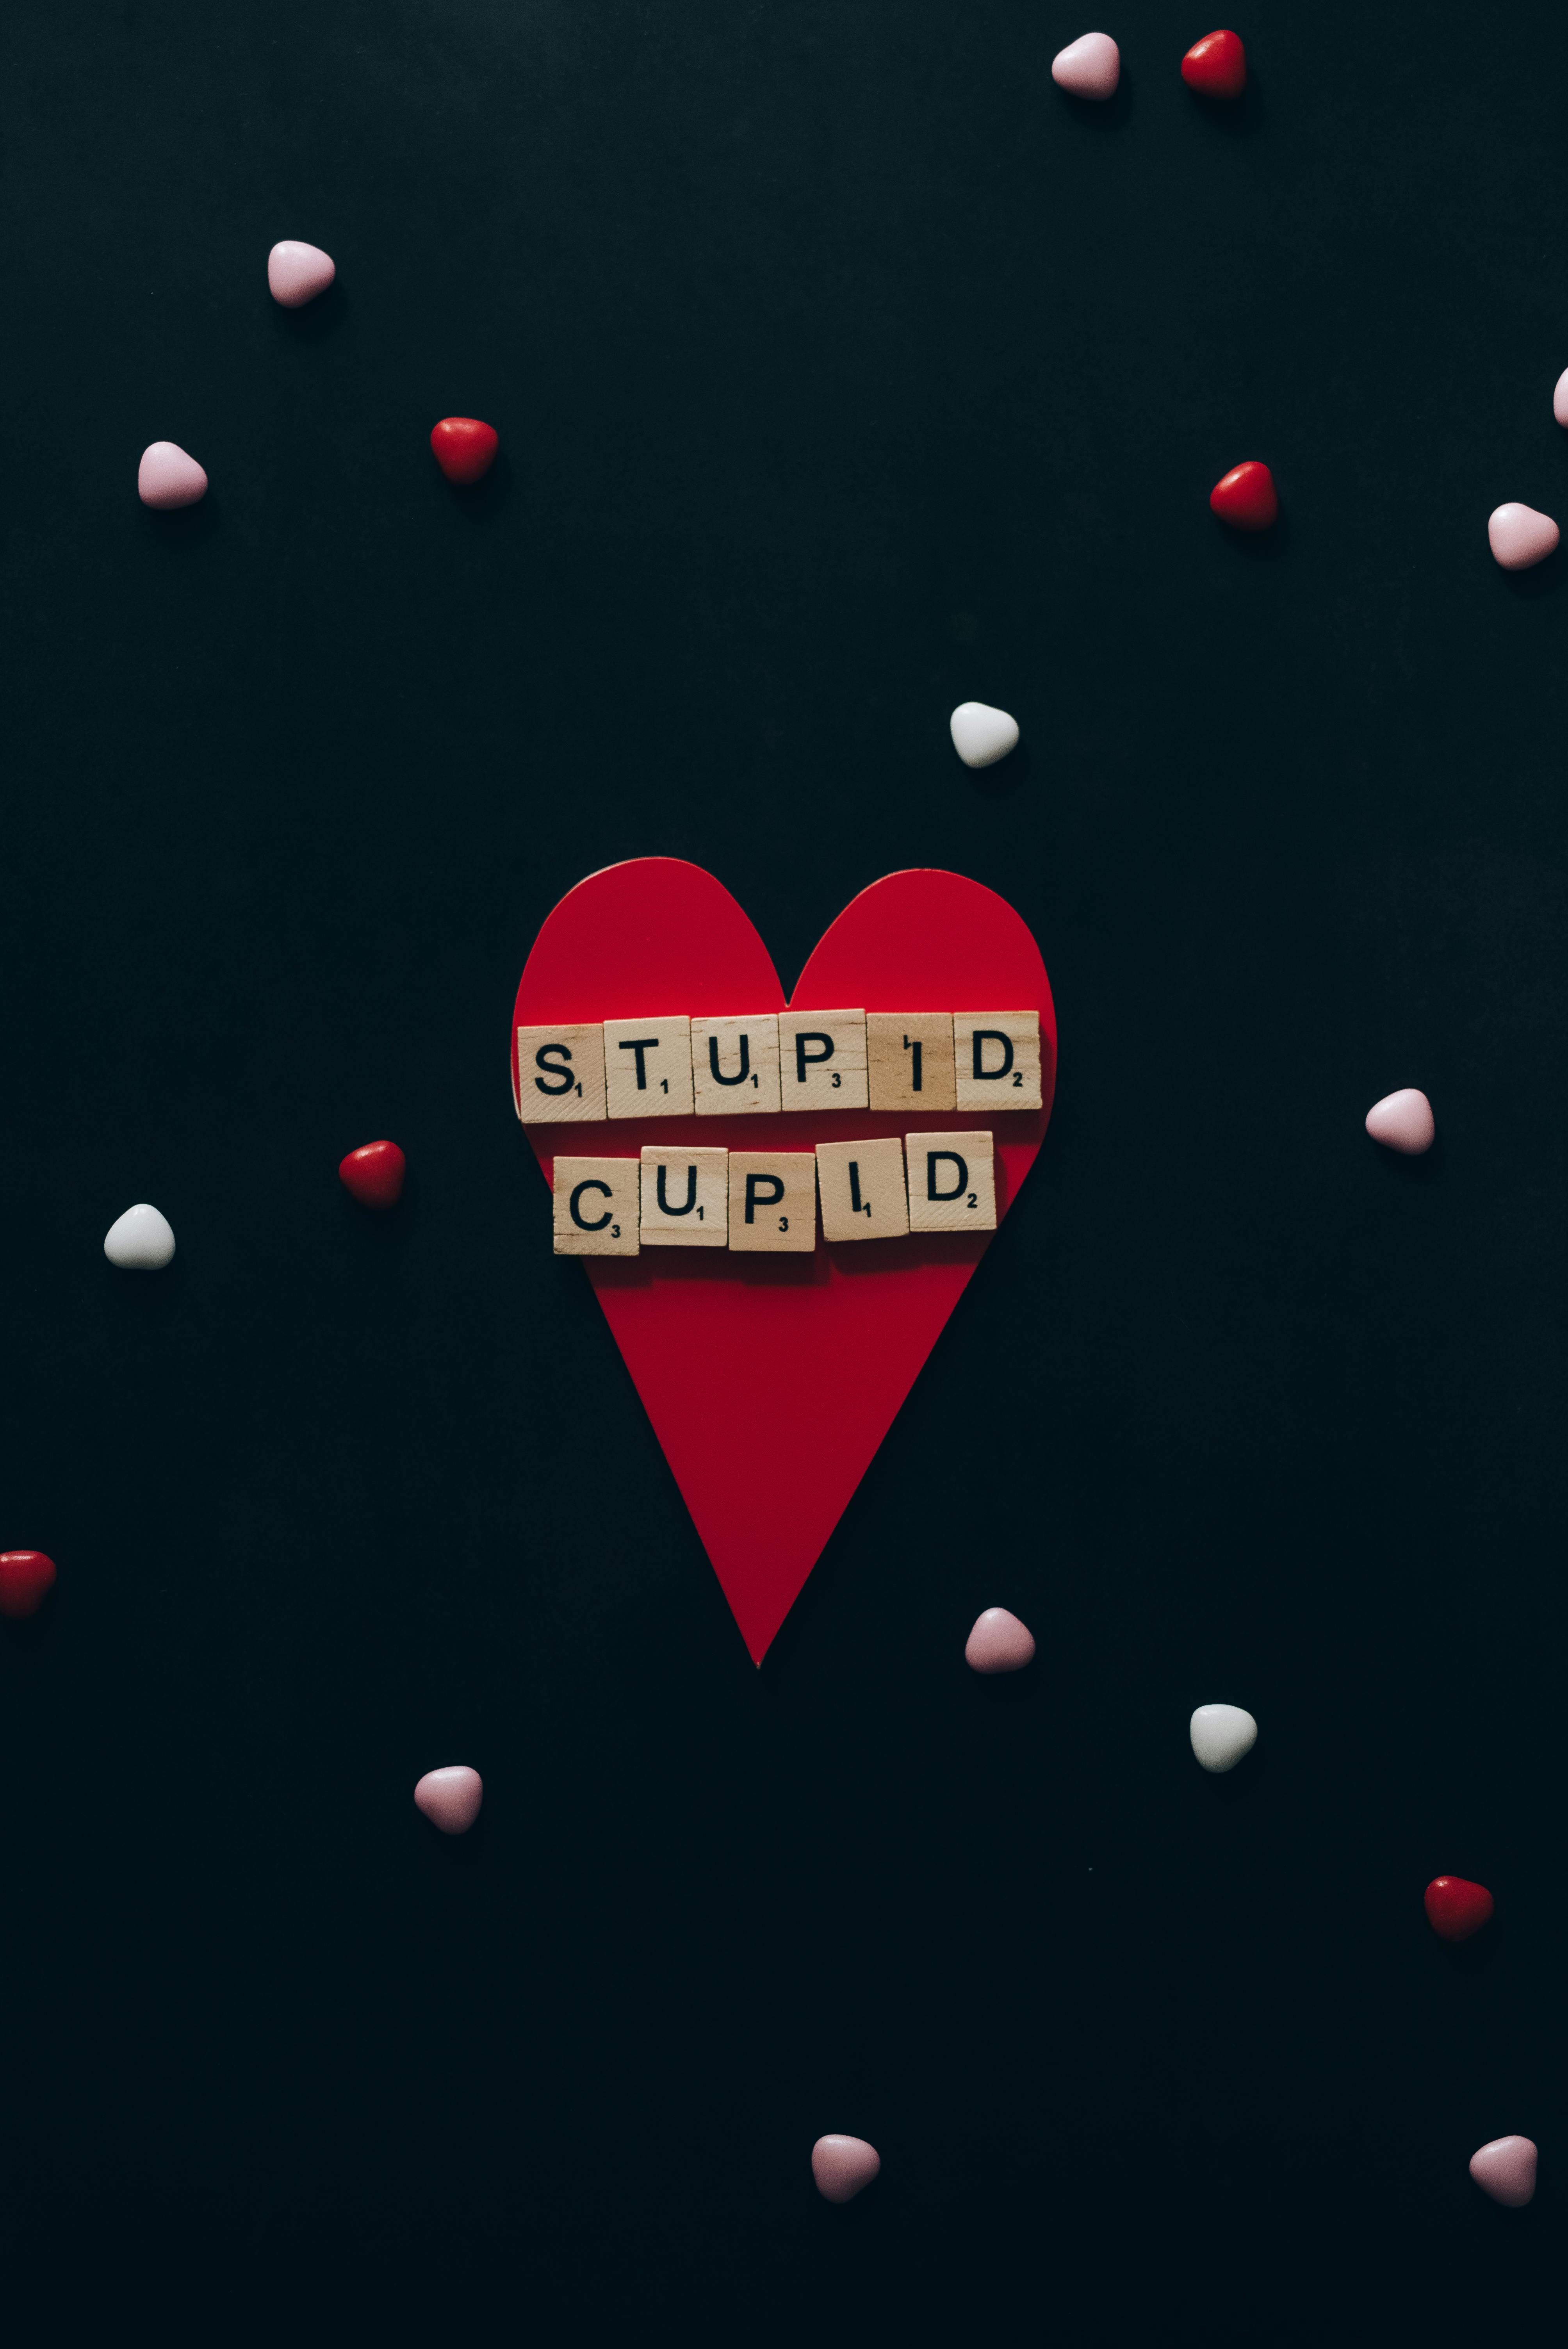 Cupid download